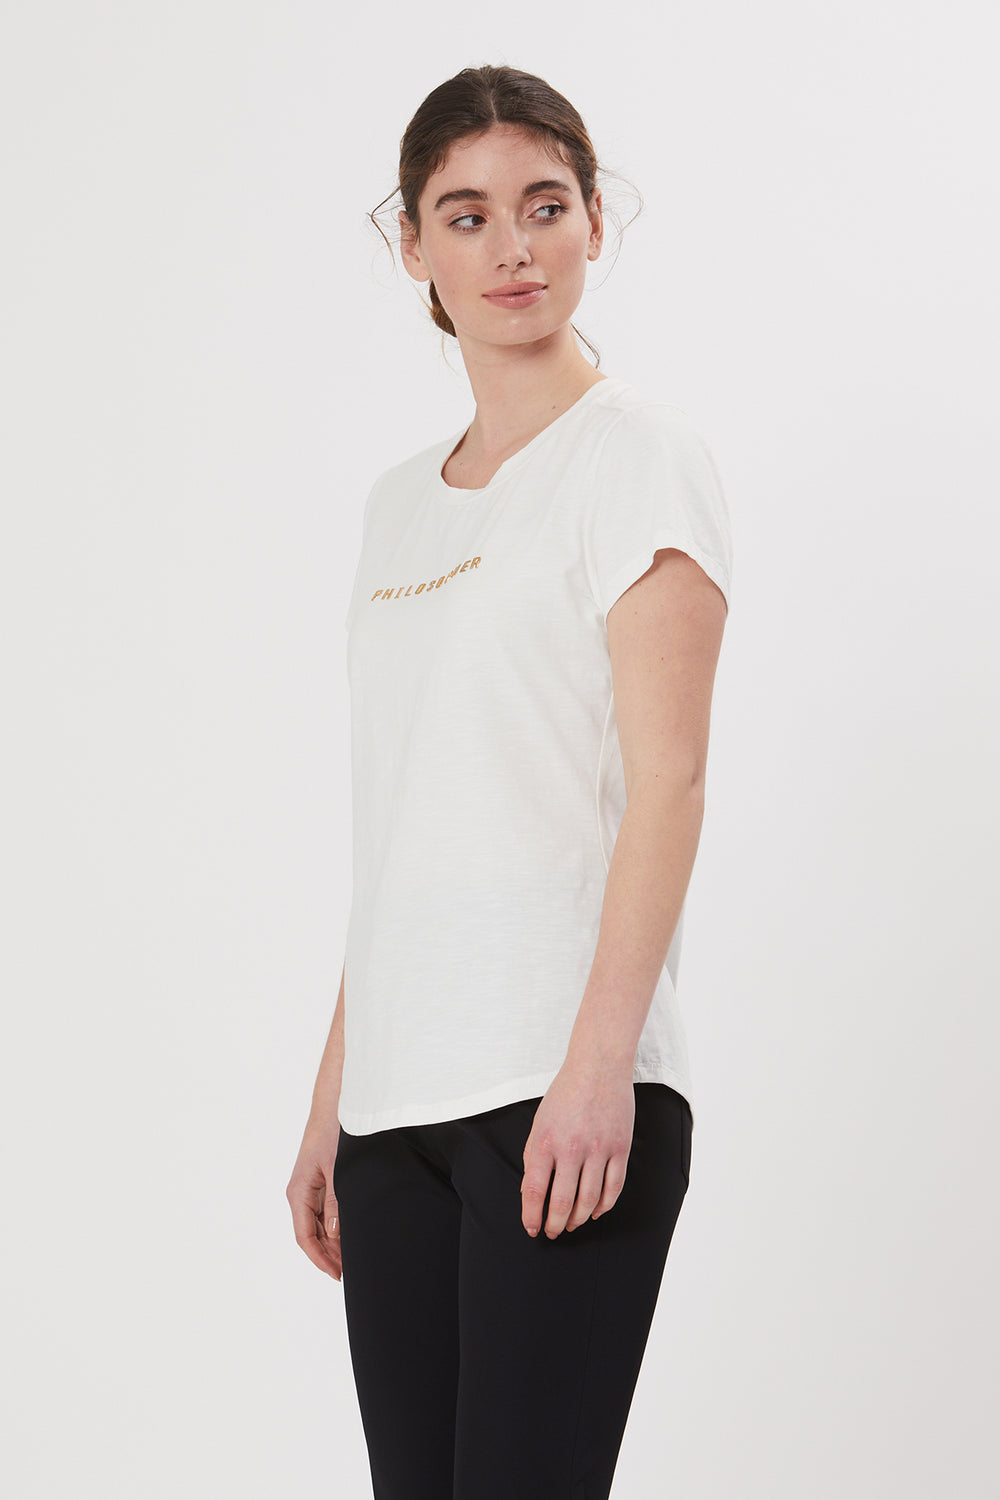 PBO Philosopher T-shirt T-SHIRTS 101 Star white